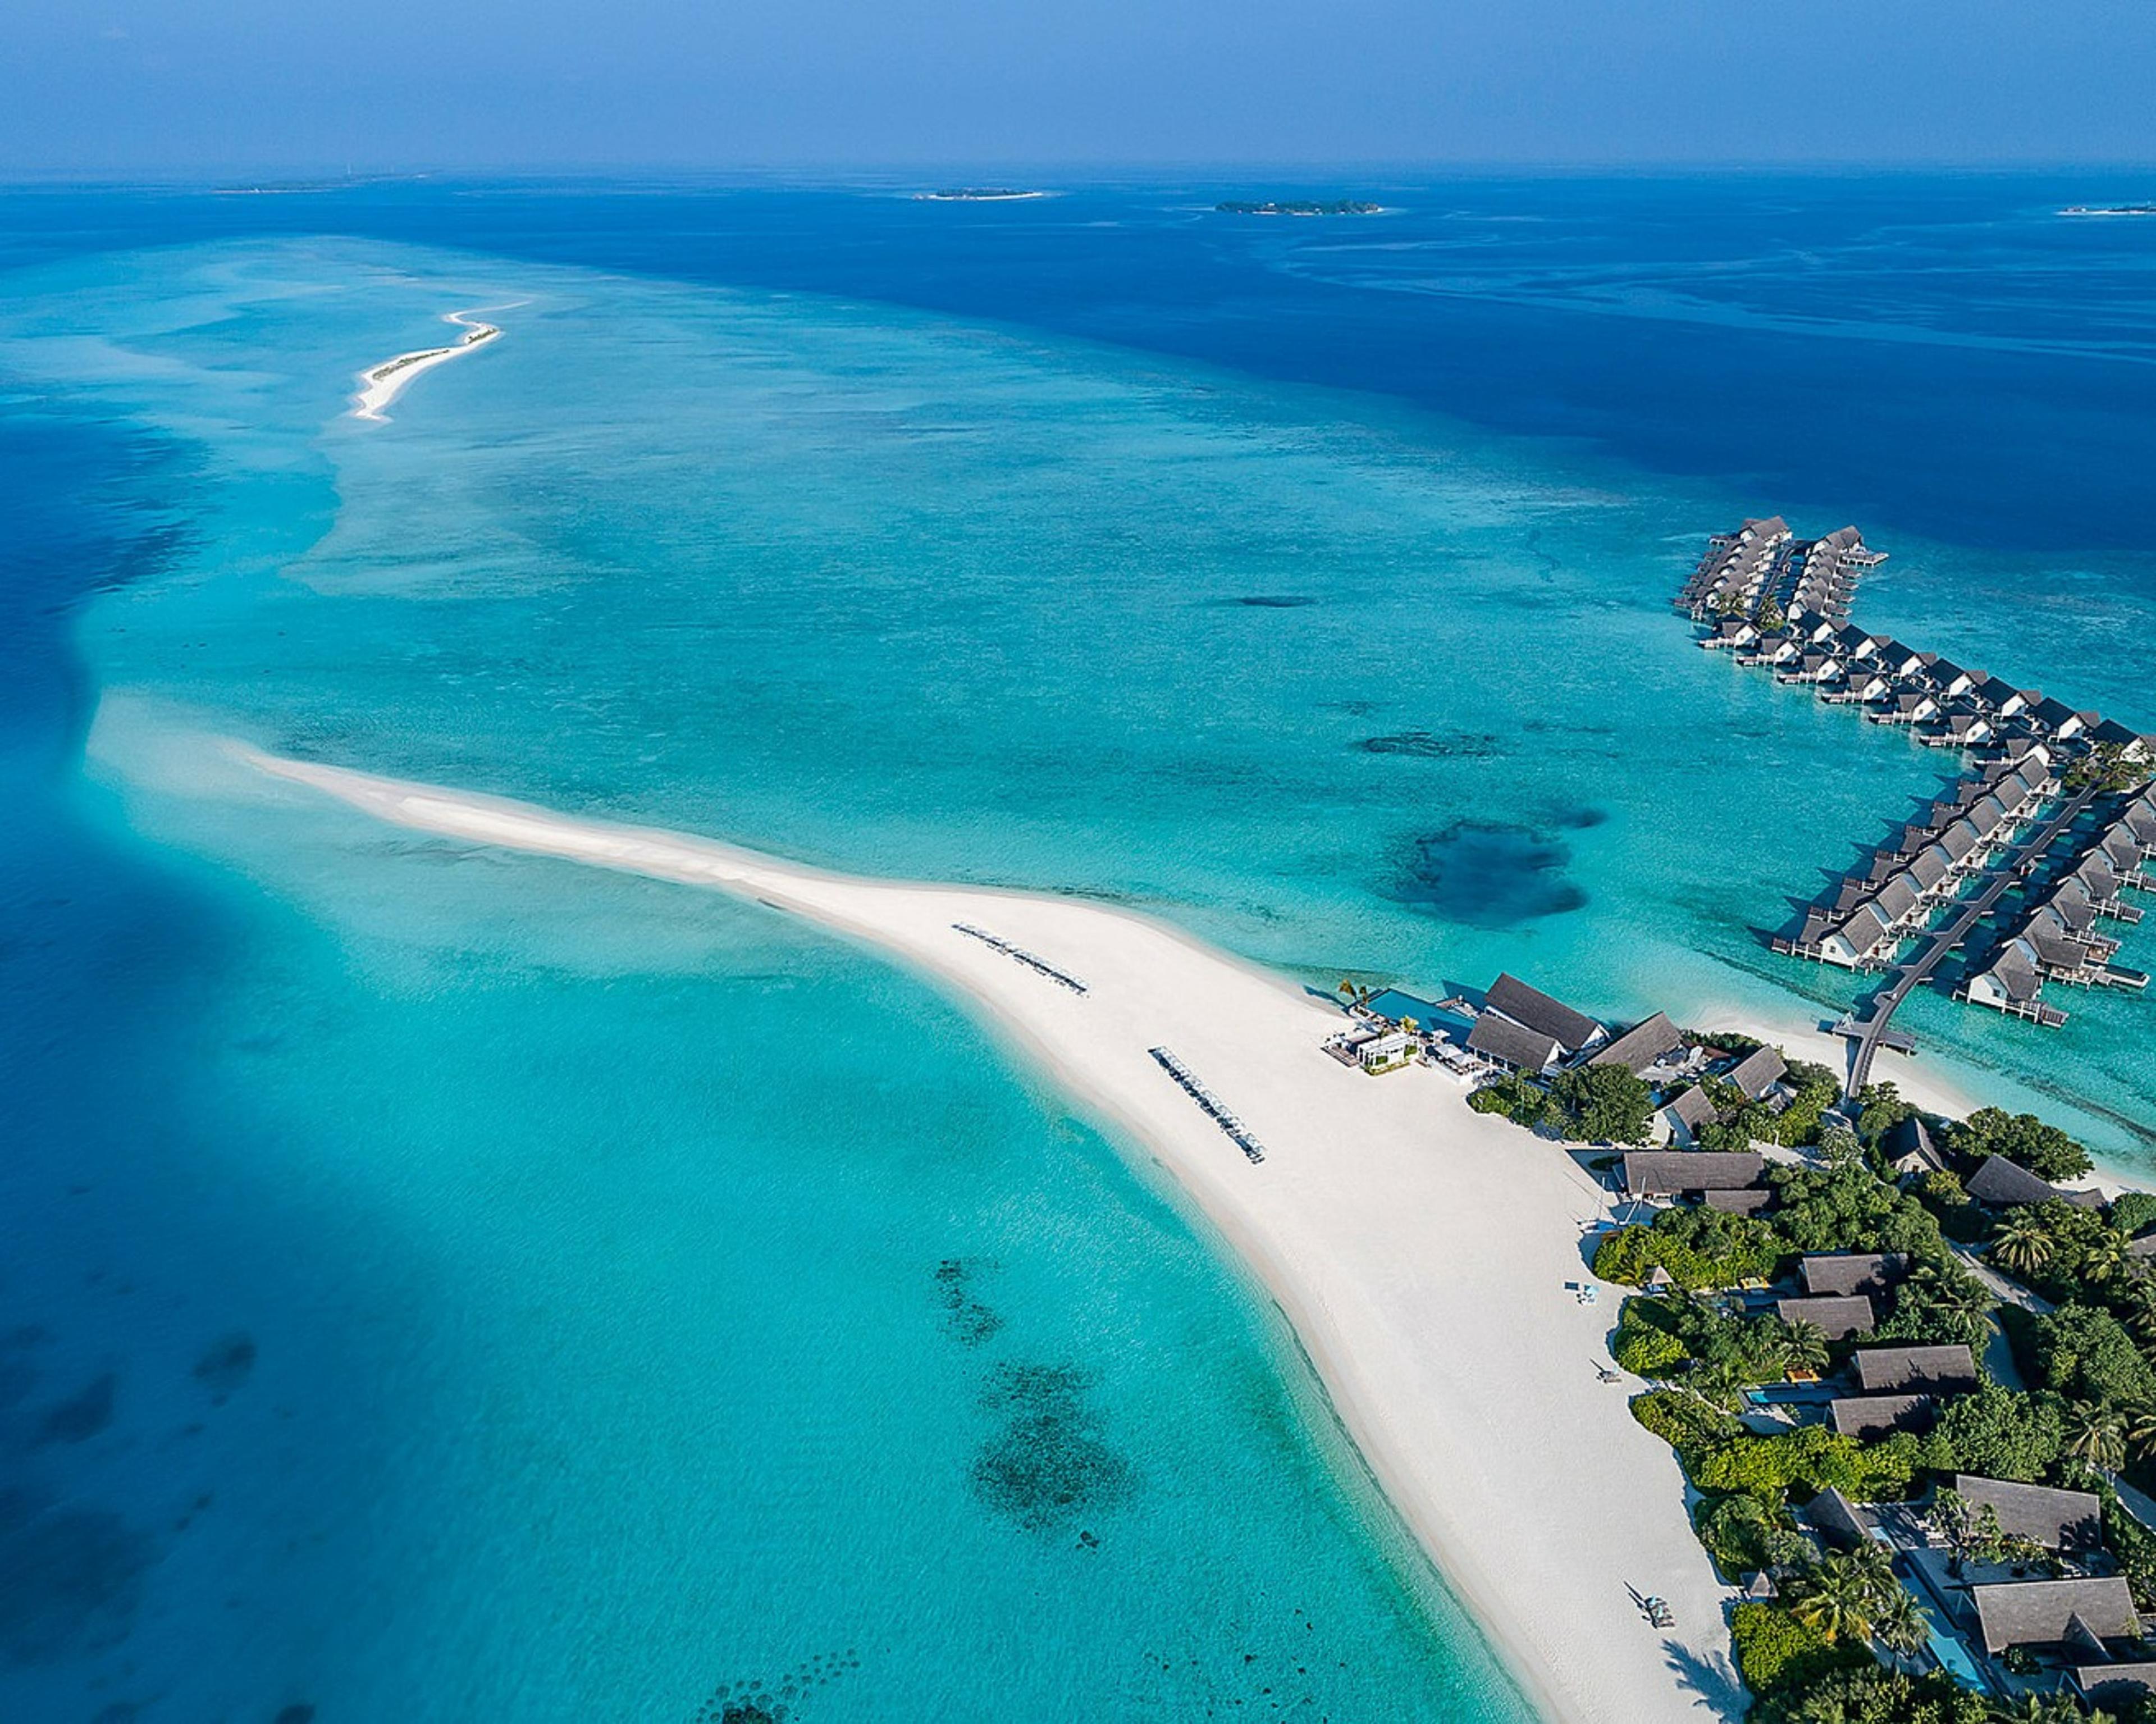 Four Seasons Resort at Landaa Giraavaru - Baa Atoll, Maldives